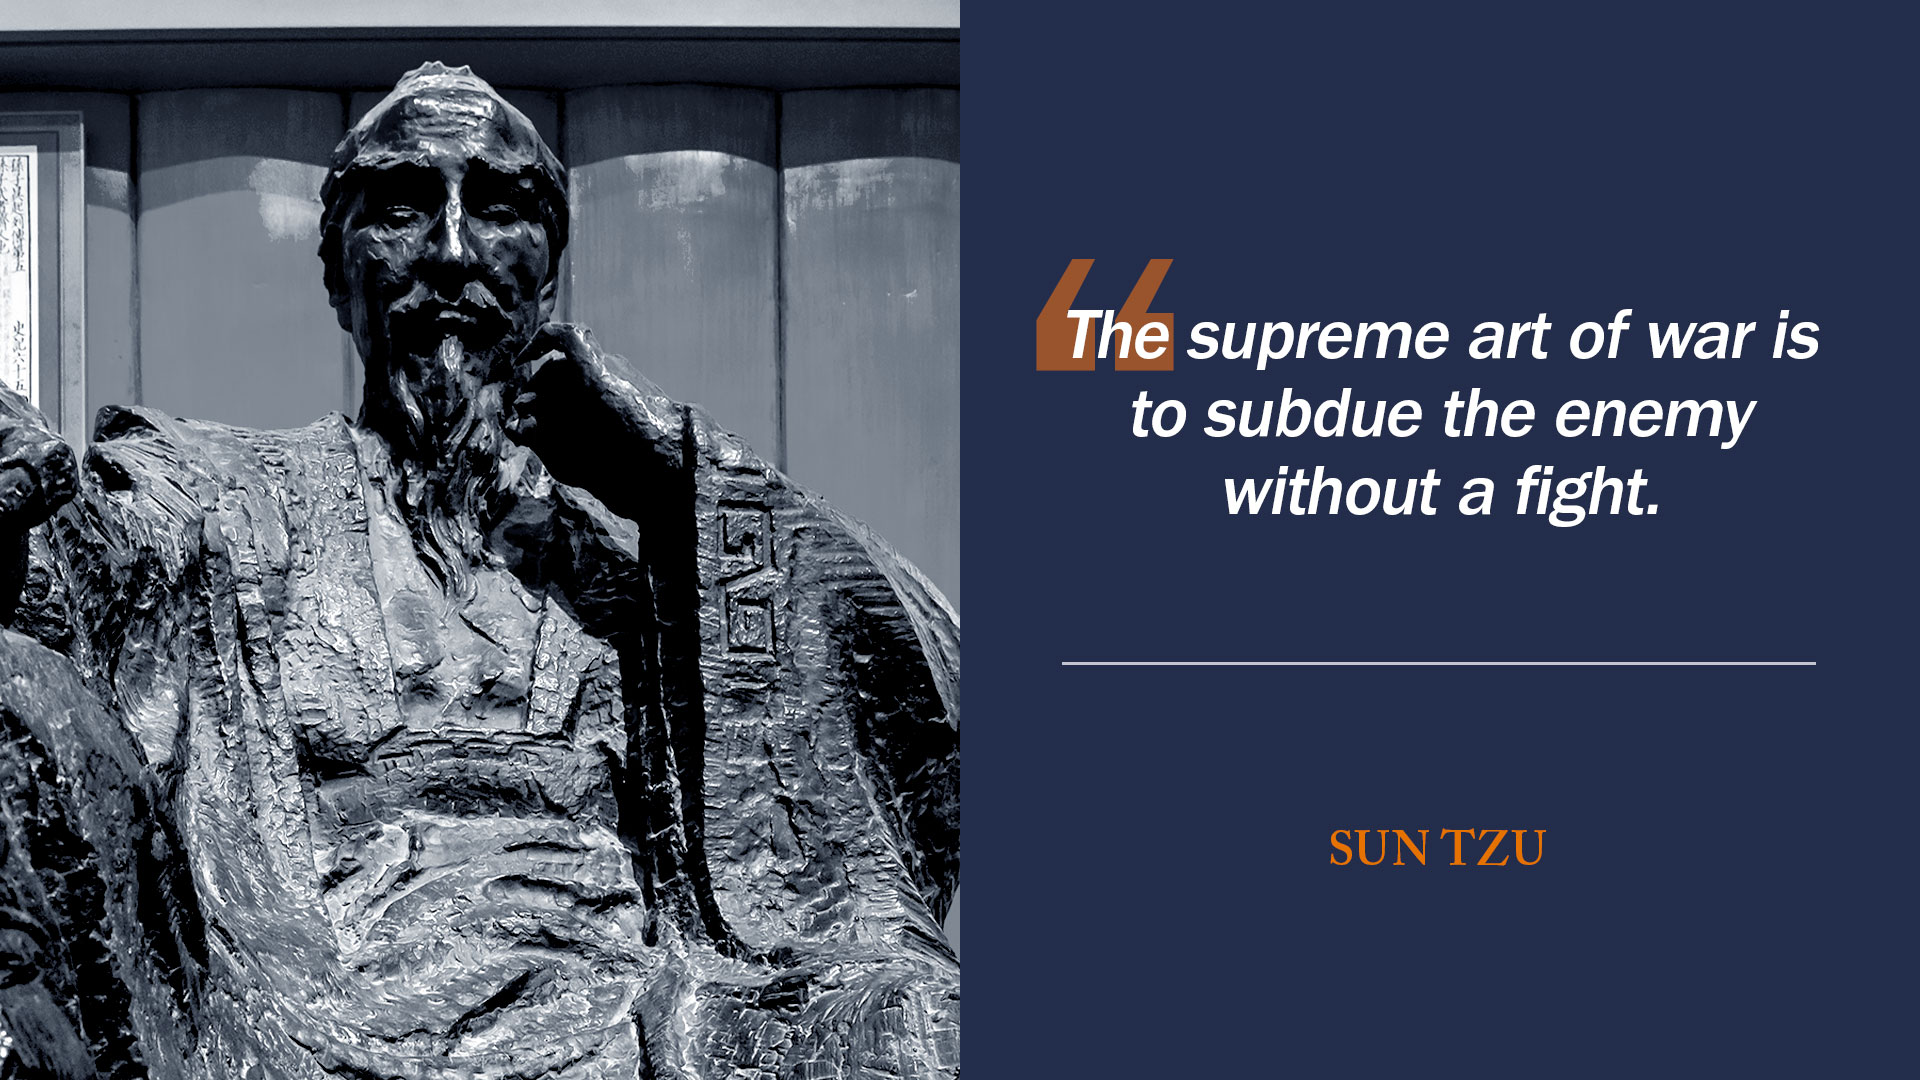 Statue of Sun Tzu with quote